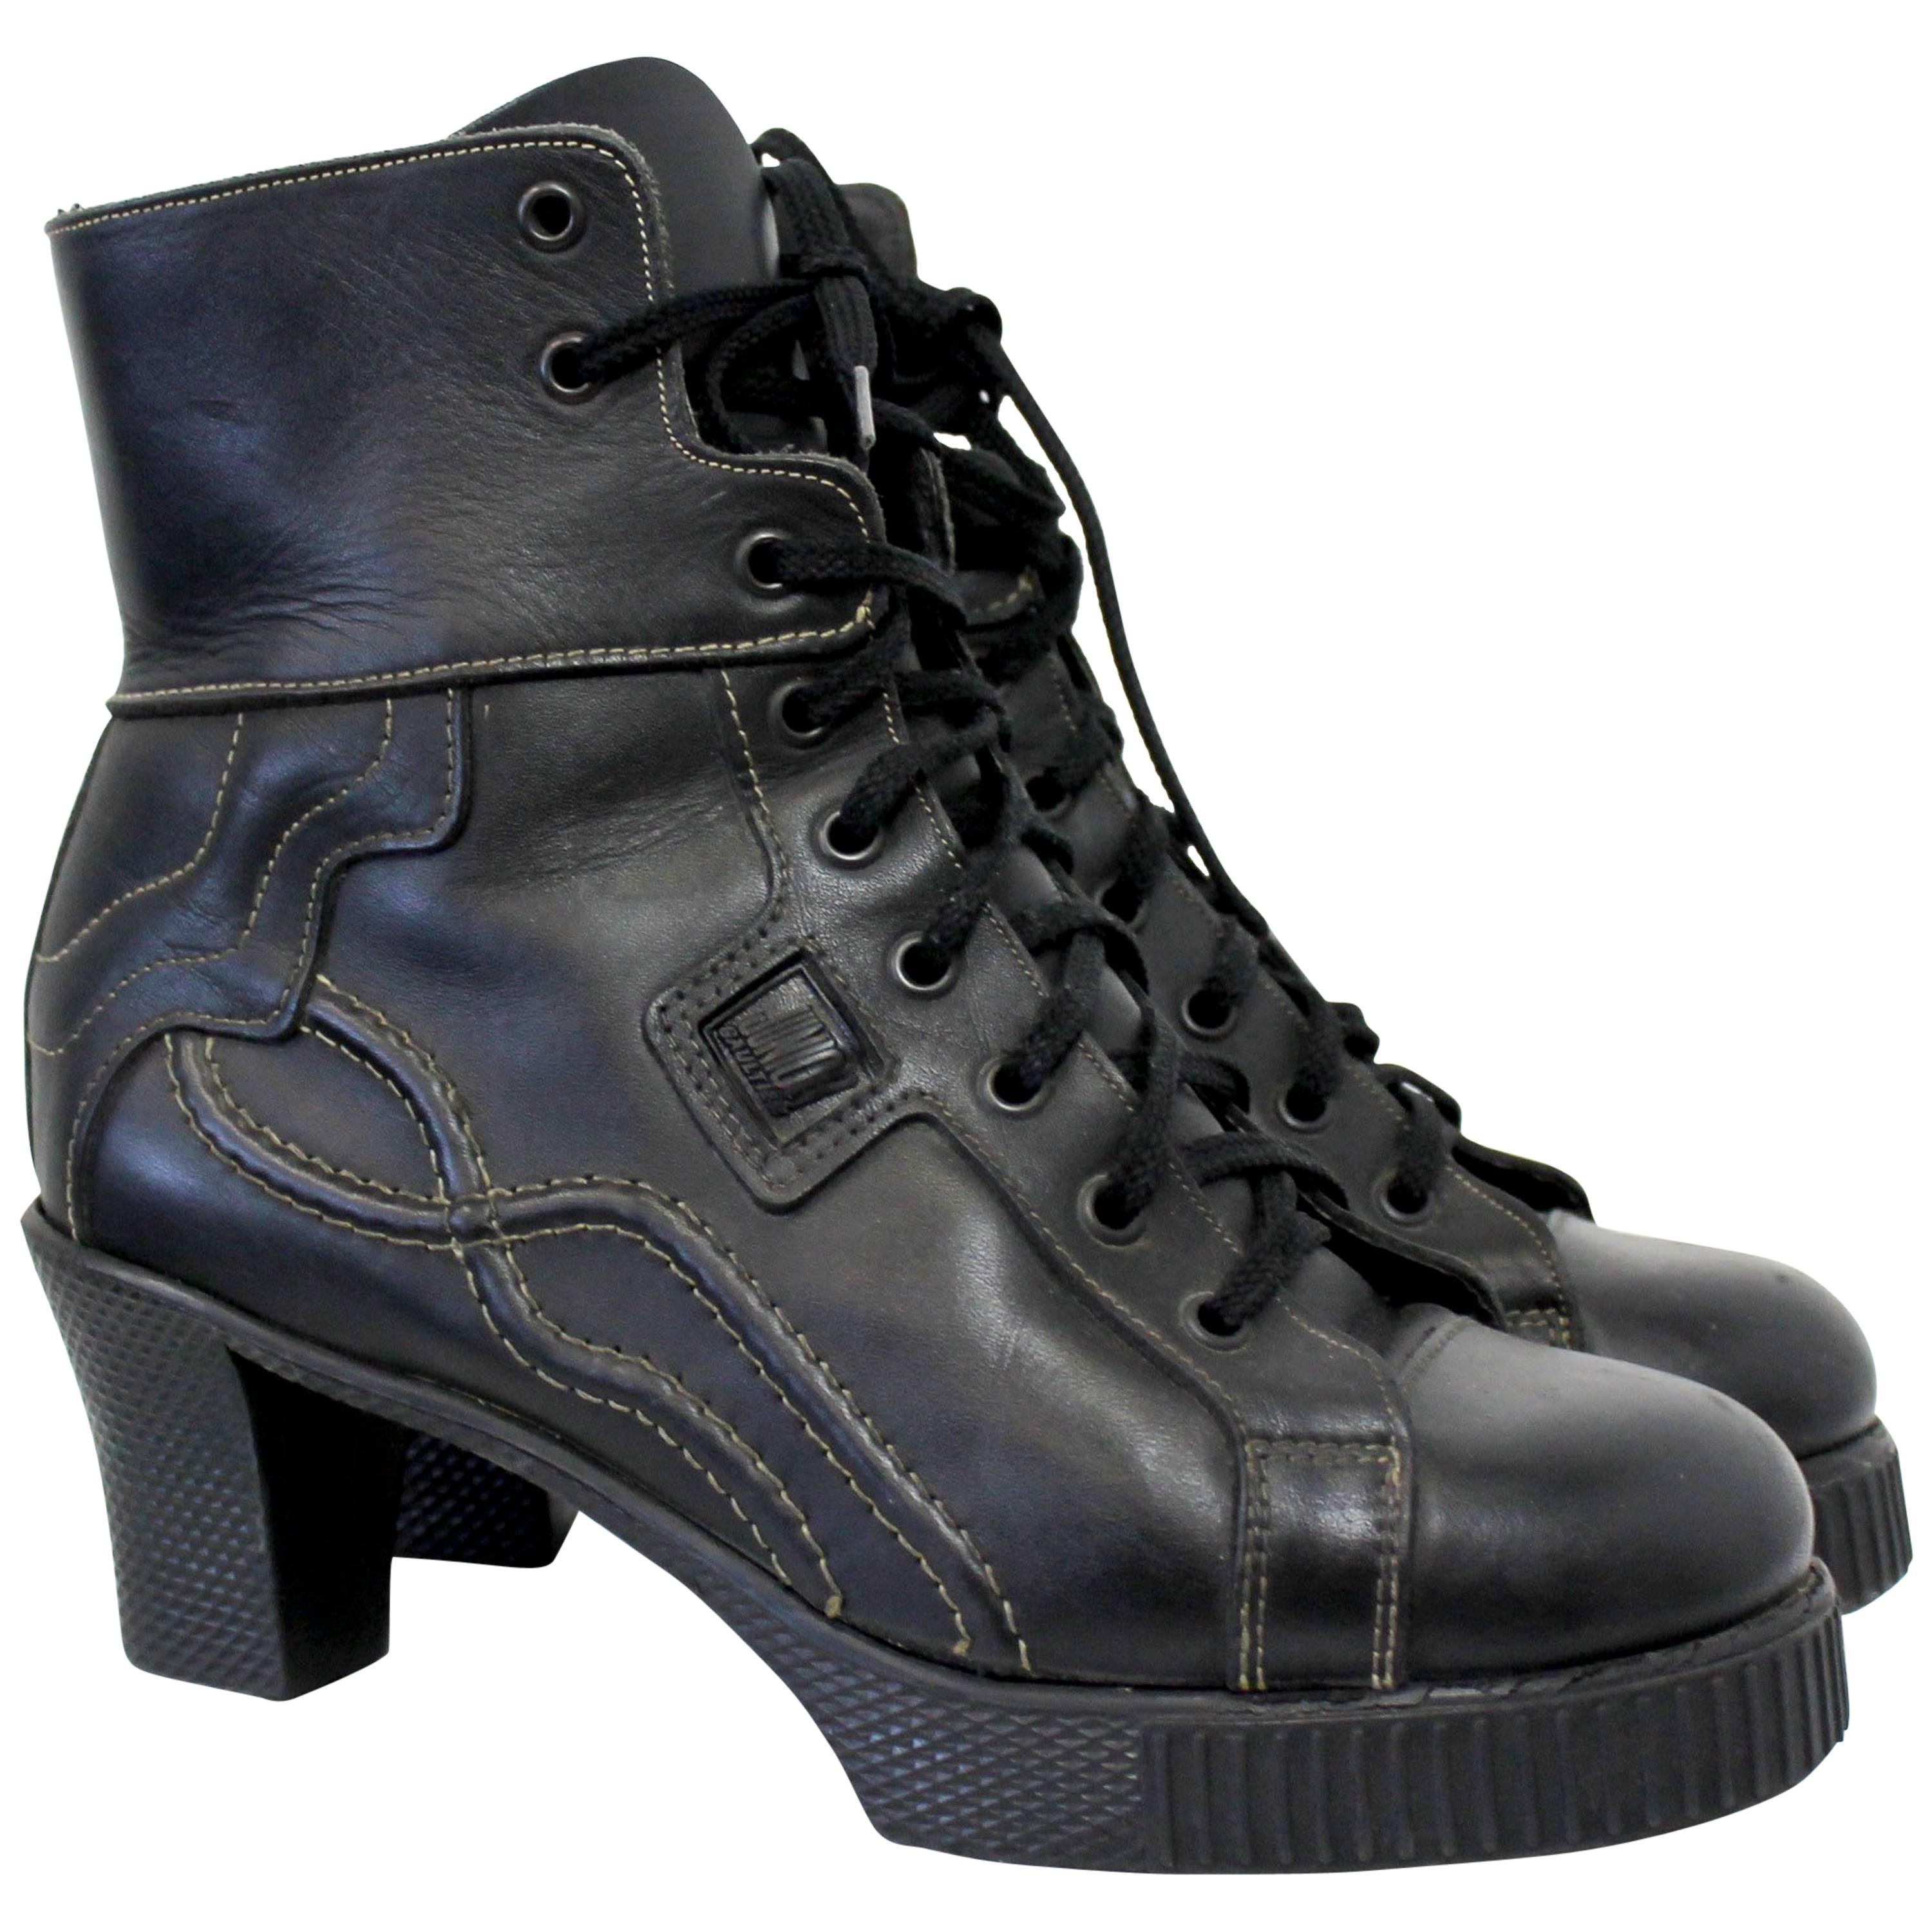 Junior Gaultier Black Lace-Up Boots c. 1990 For Sale